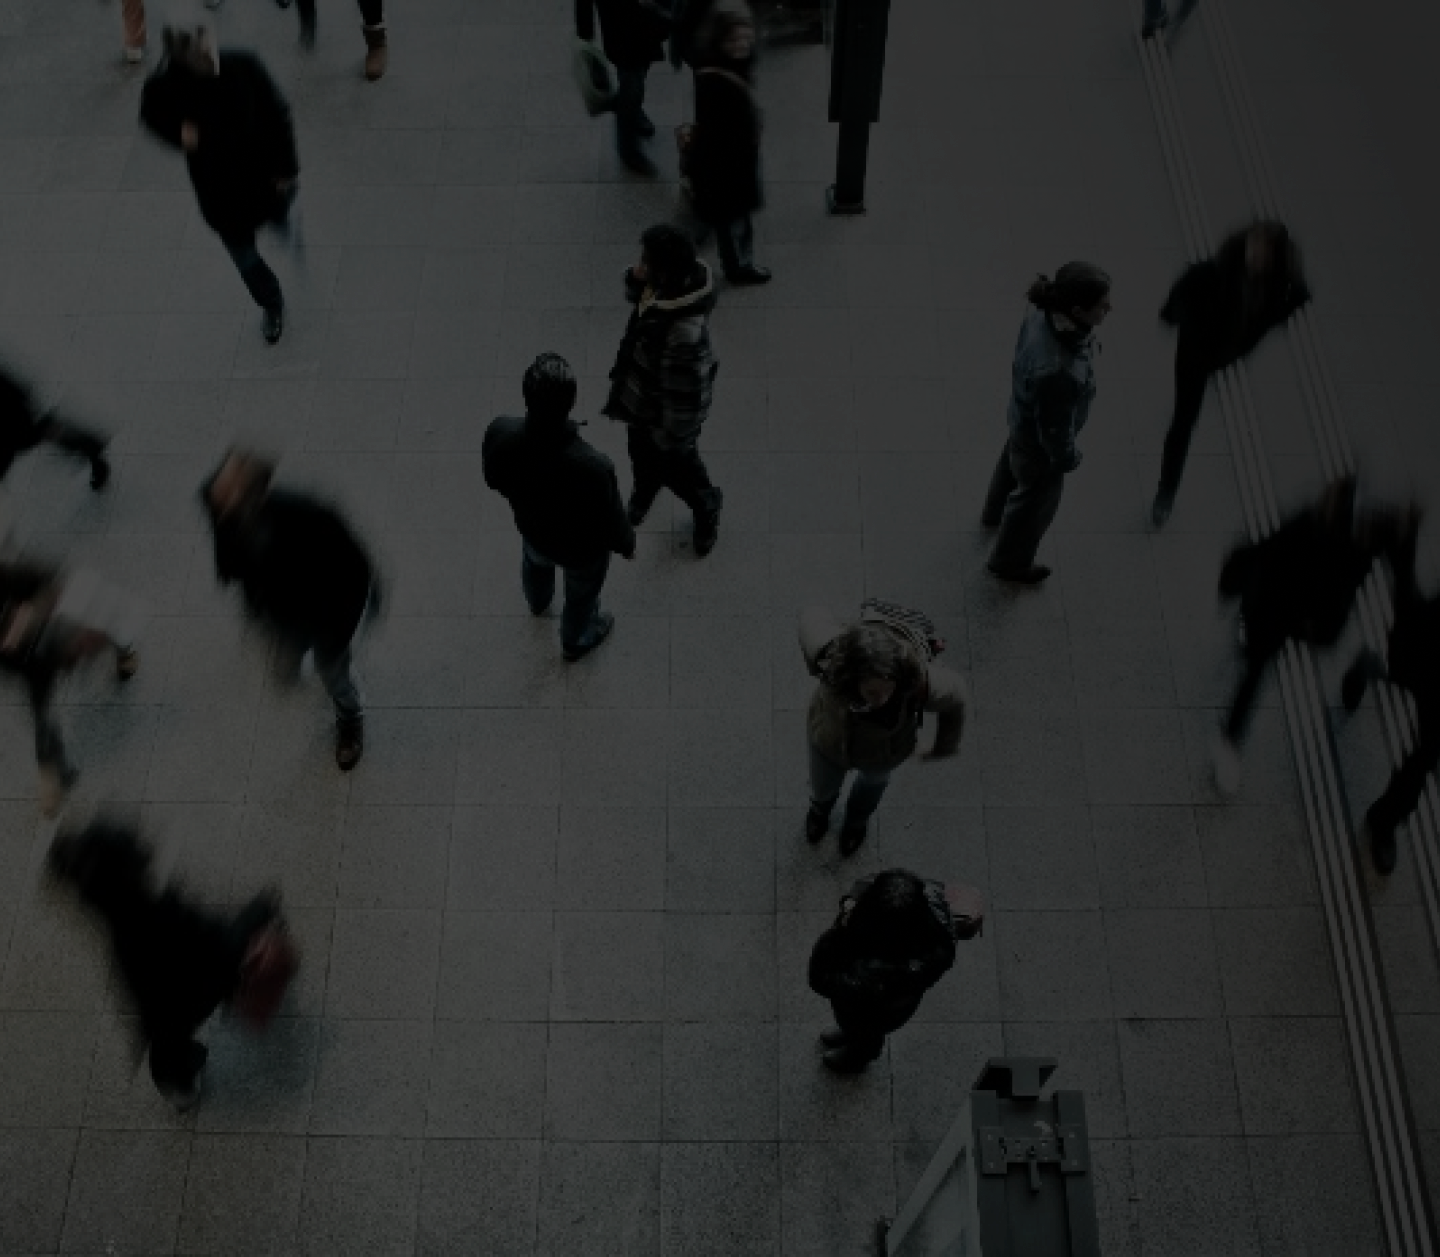 Blurred motion of various people walking on a dimly lit indoor floor